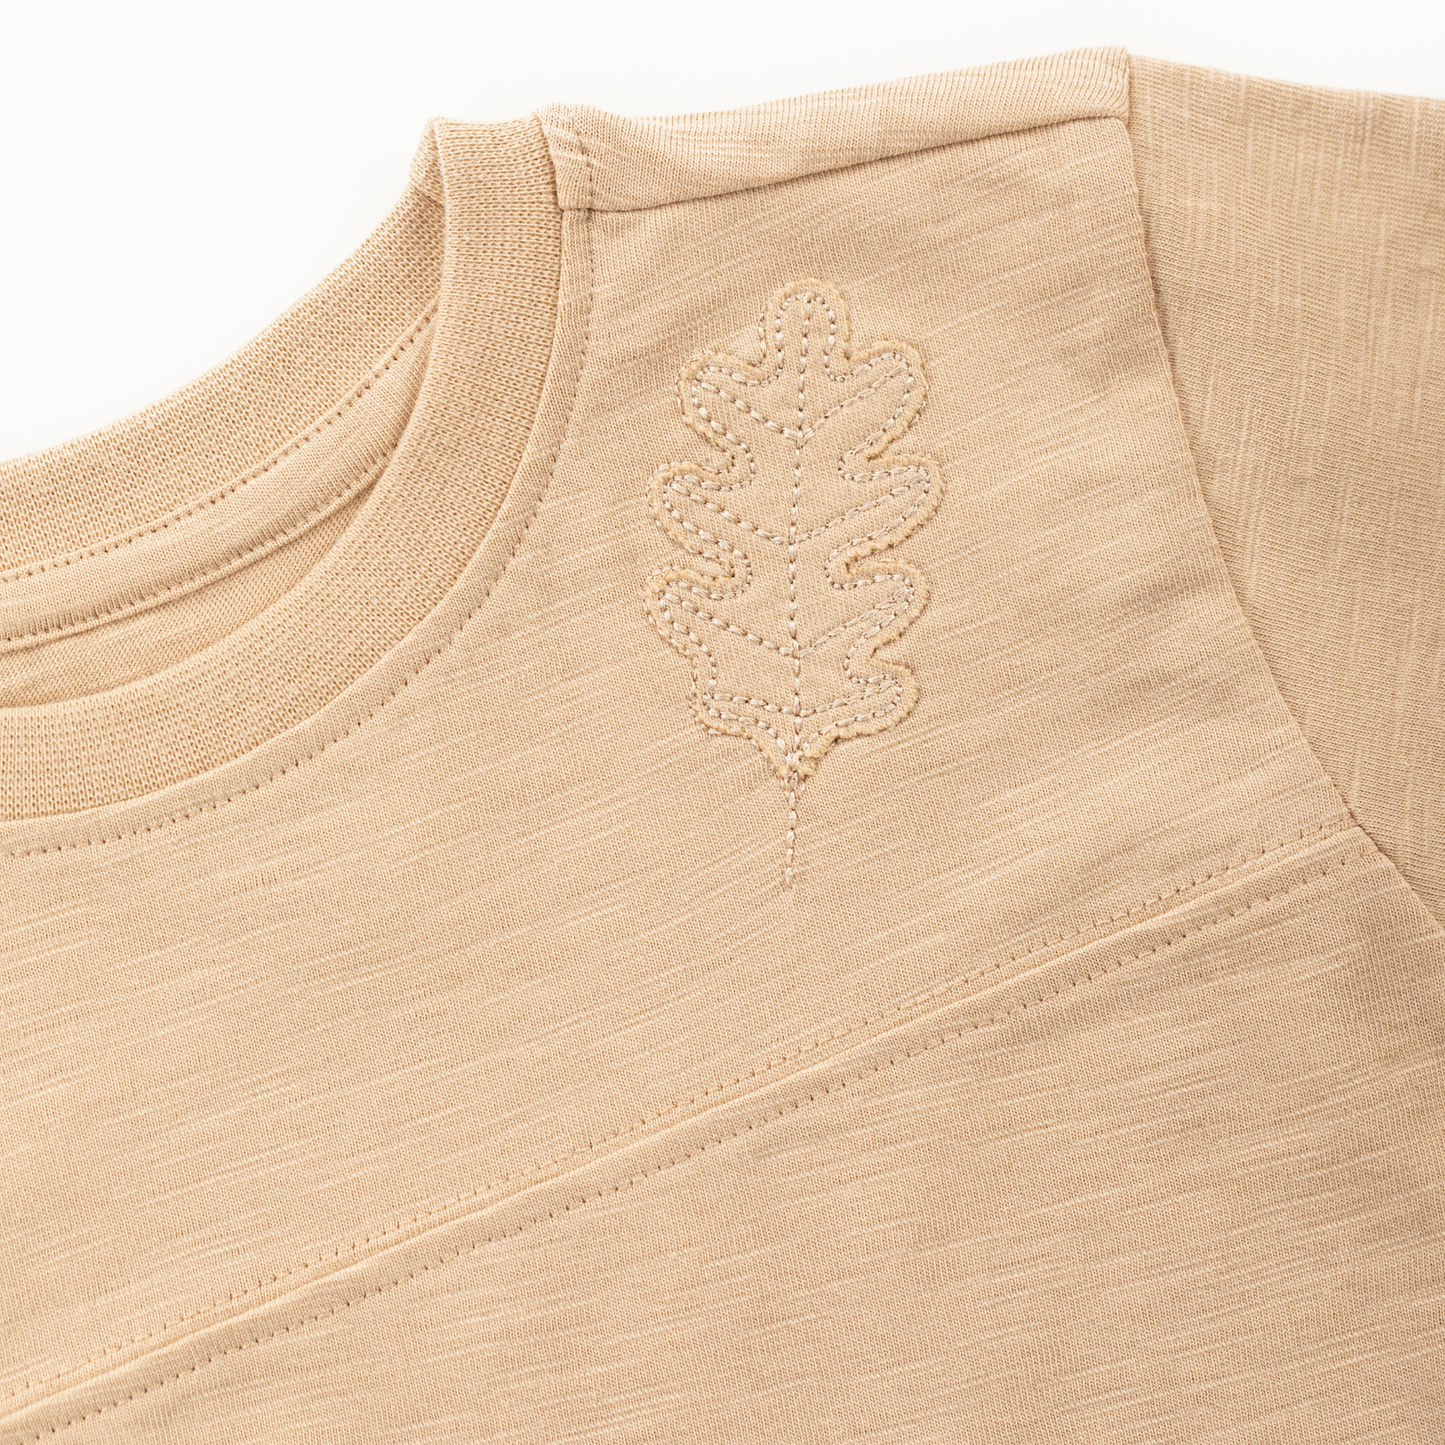 Oak beige cotton t-shirt- Sand